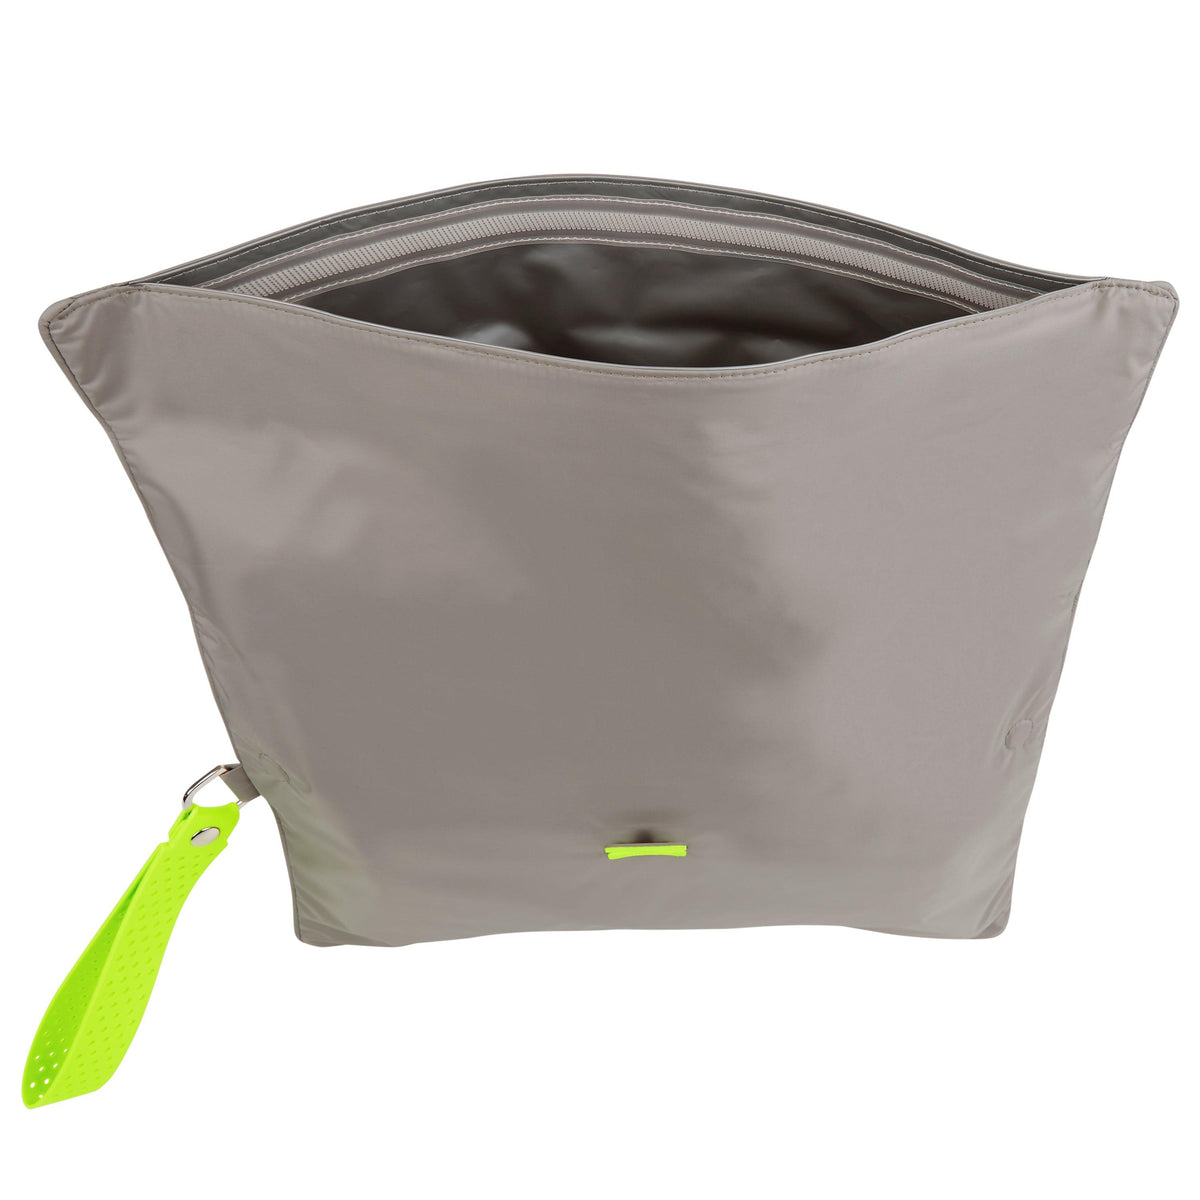 Maxi Wet Bag in Walnut Neon Green open, and showing waterproof lining 